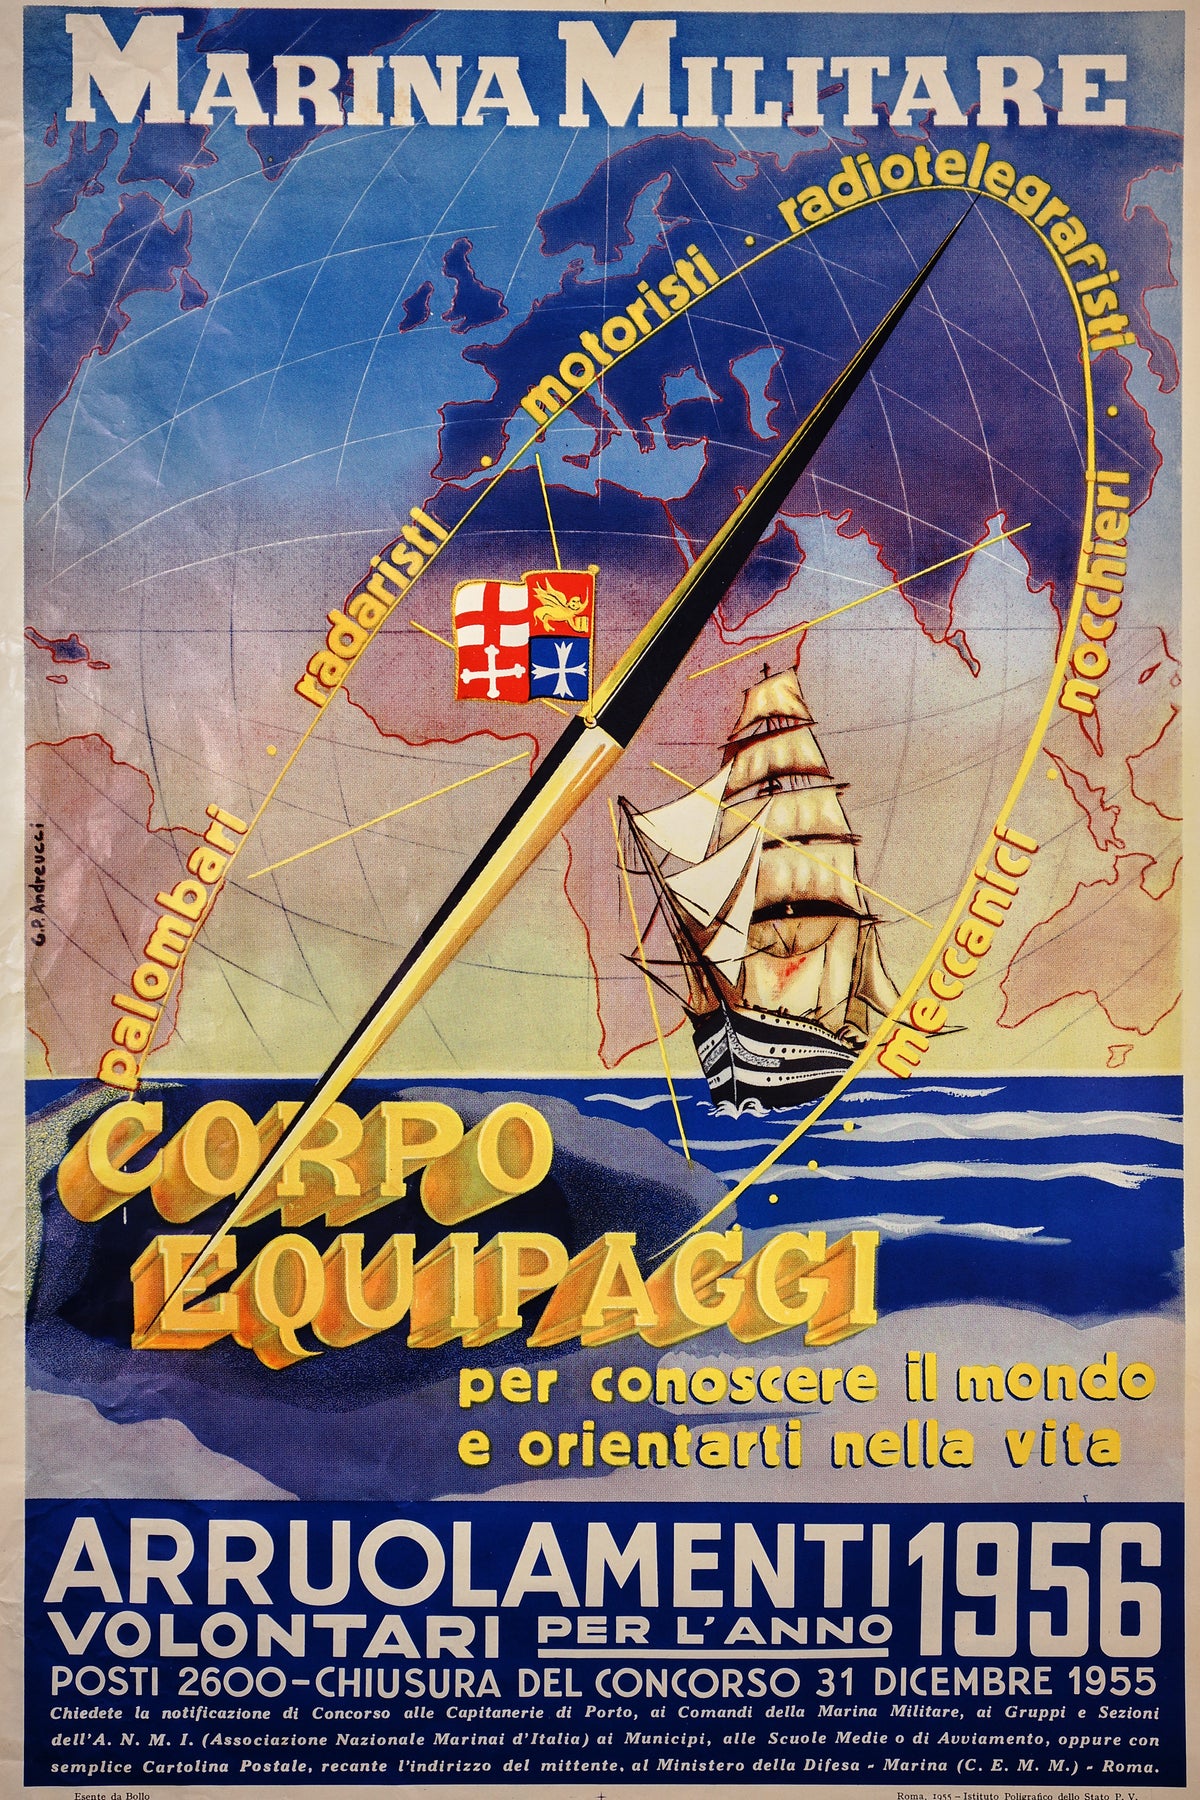 Marina Militare - Authentic Vintage Poster